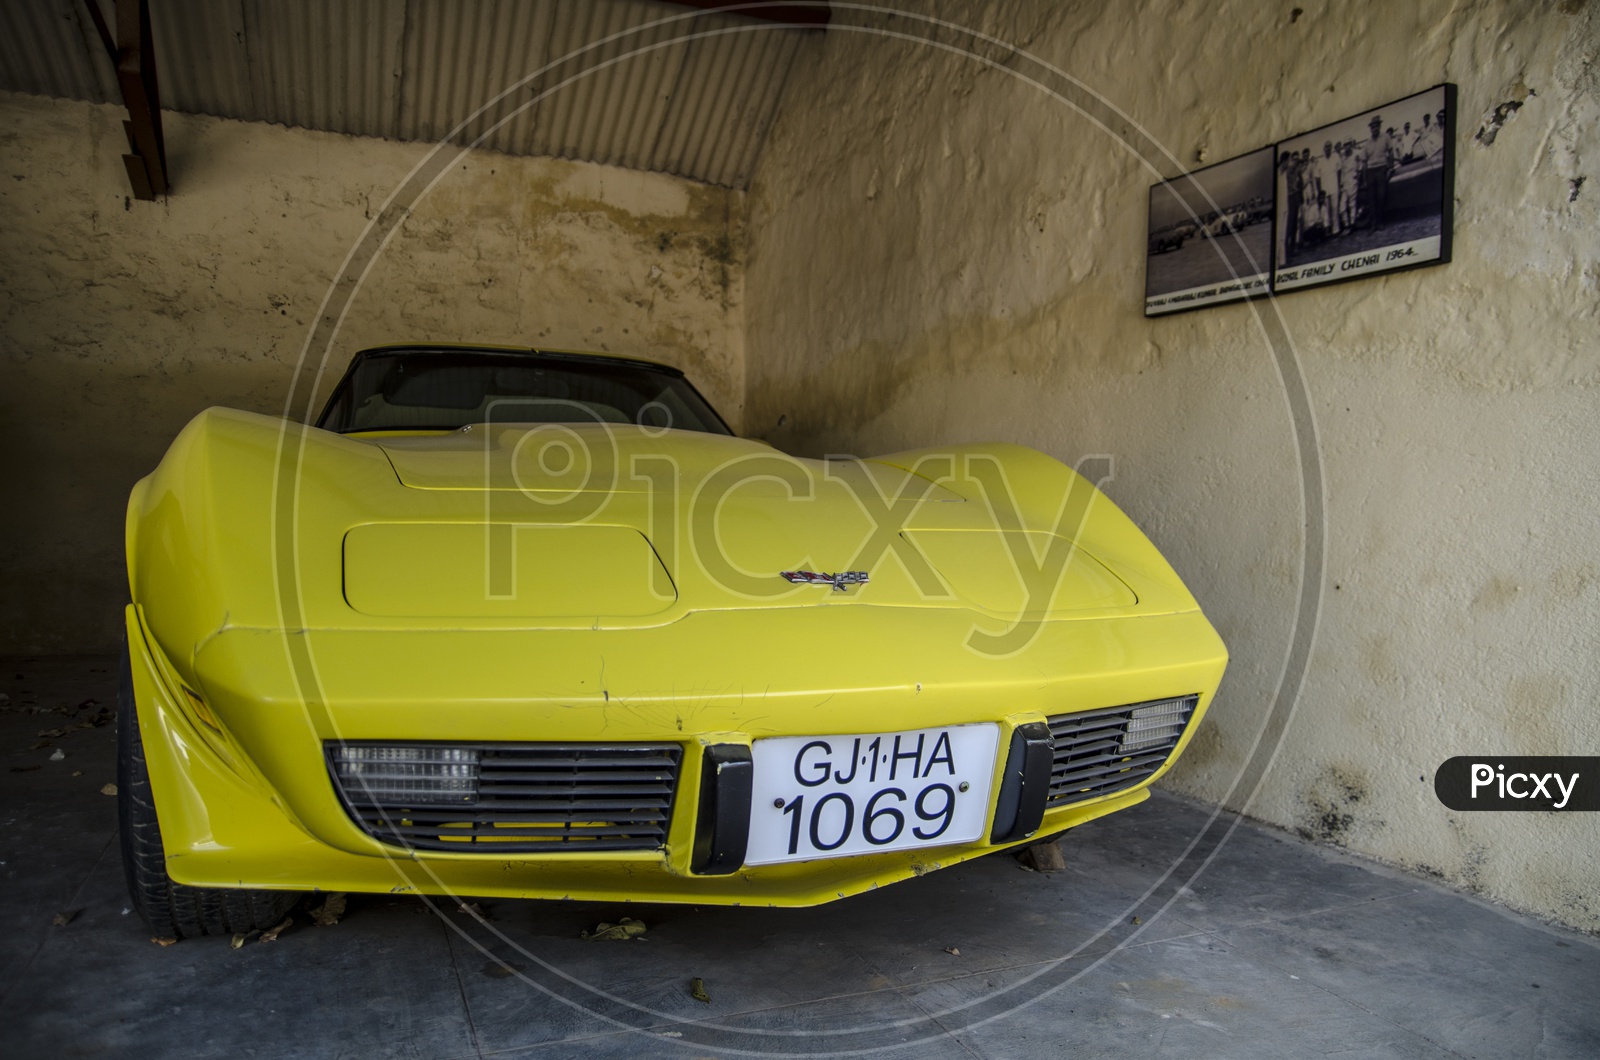 Chevrolet Corvette Car at Gondal State, Saurashtra